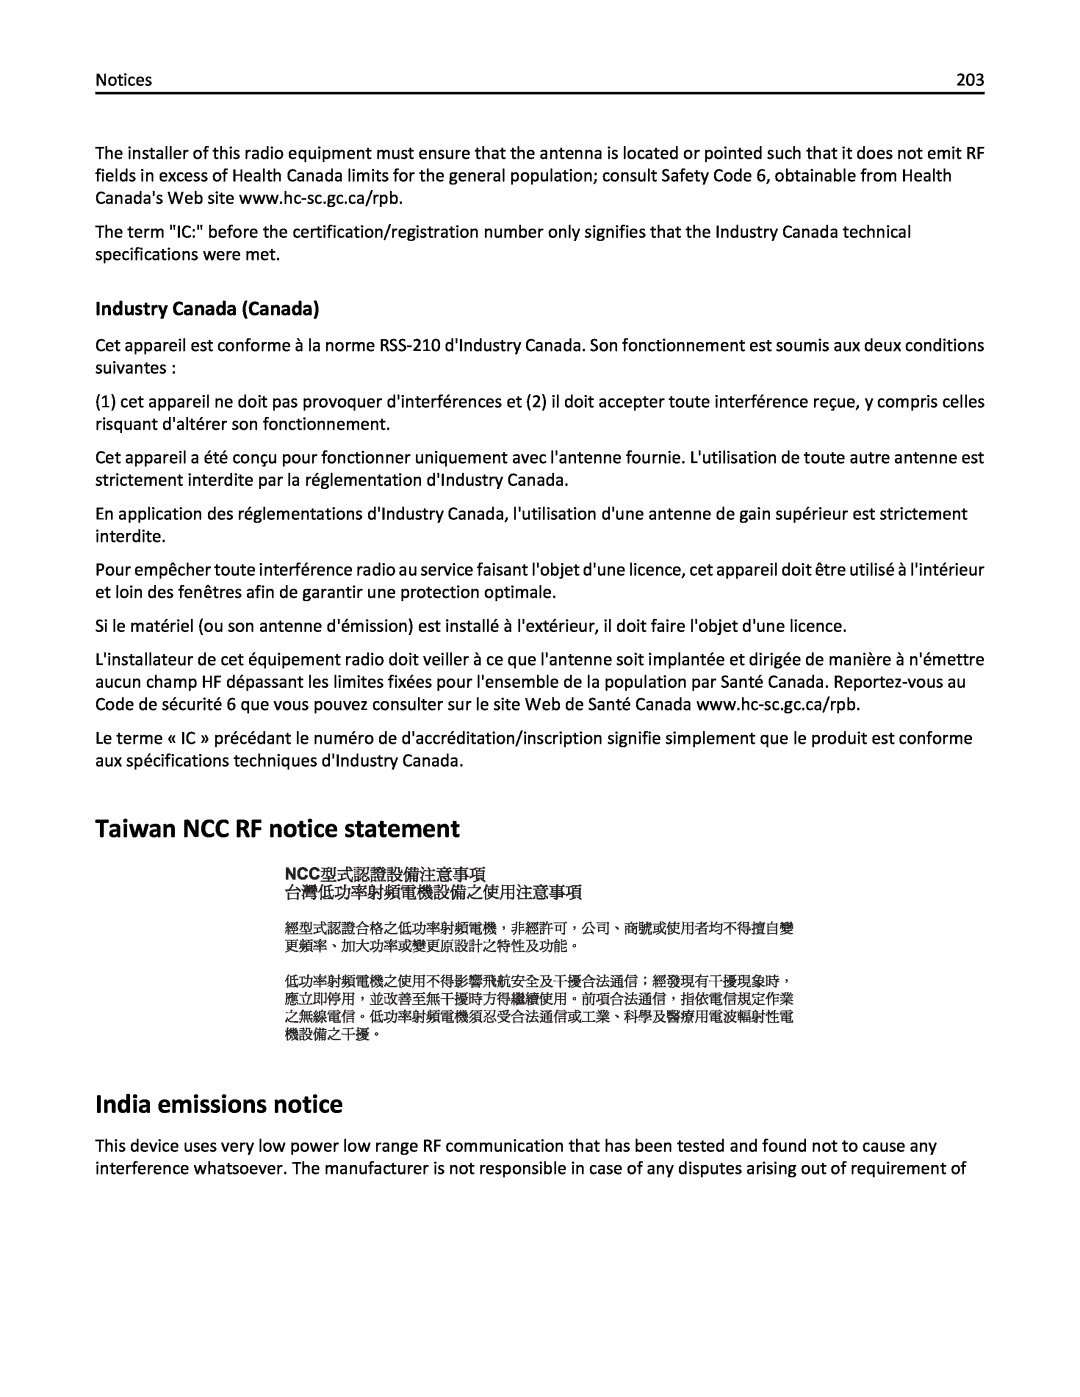 Lexmark 19Z0301, 110, W850DN manual Taiwan NCC RF notice statement India emissions notice, Industry Canada Canada 